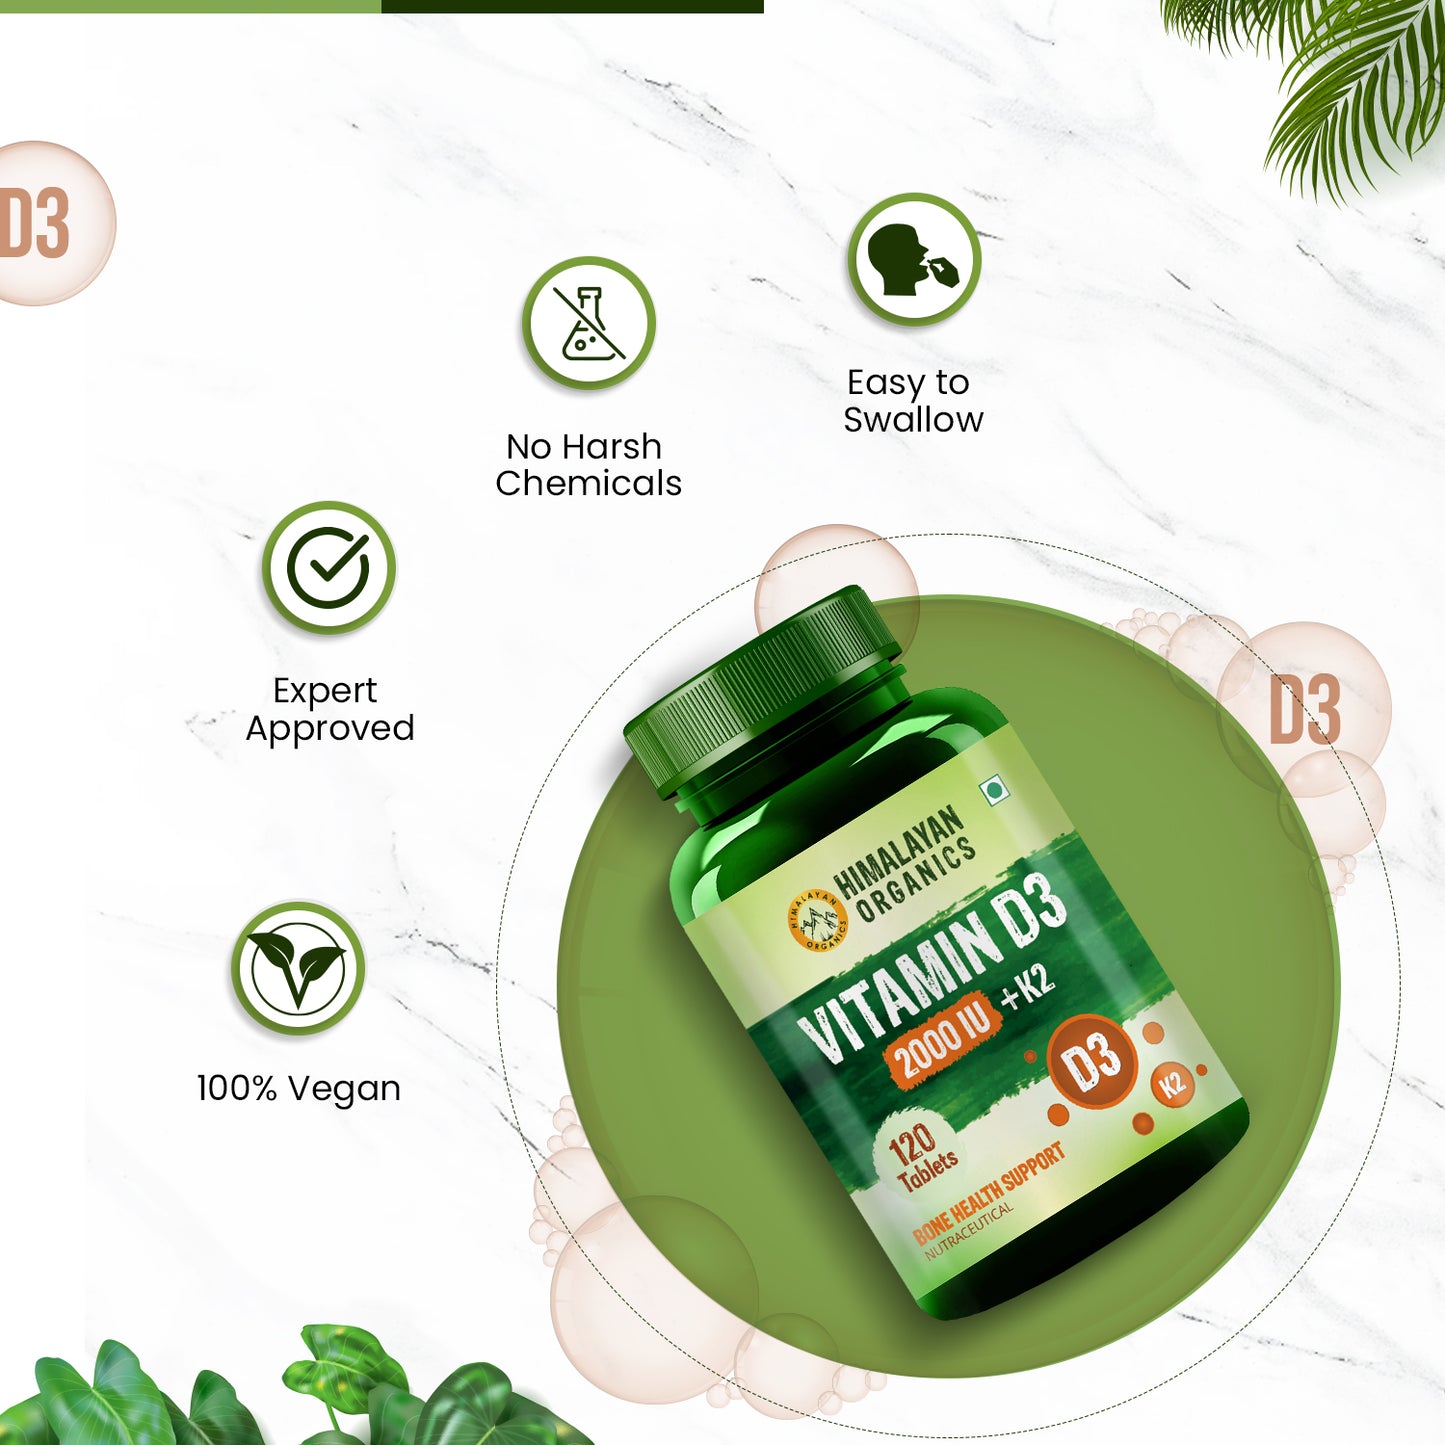 Himalayan Organics Vitamin D3 2000 IU Supplement + Vitamin K2 as Mk7 | Supports Stronger Immunity & Bone & Heart Health - 120 Veg Tablets